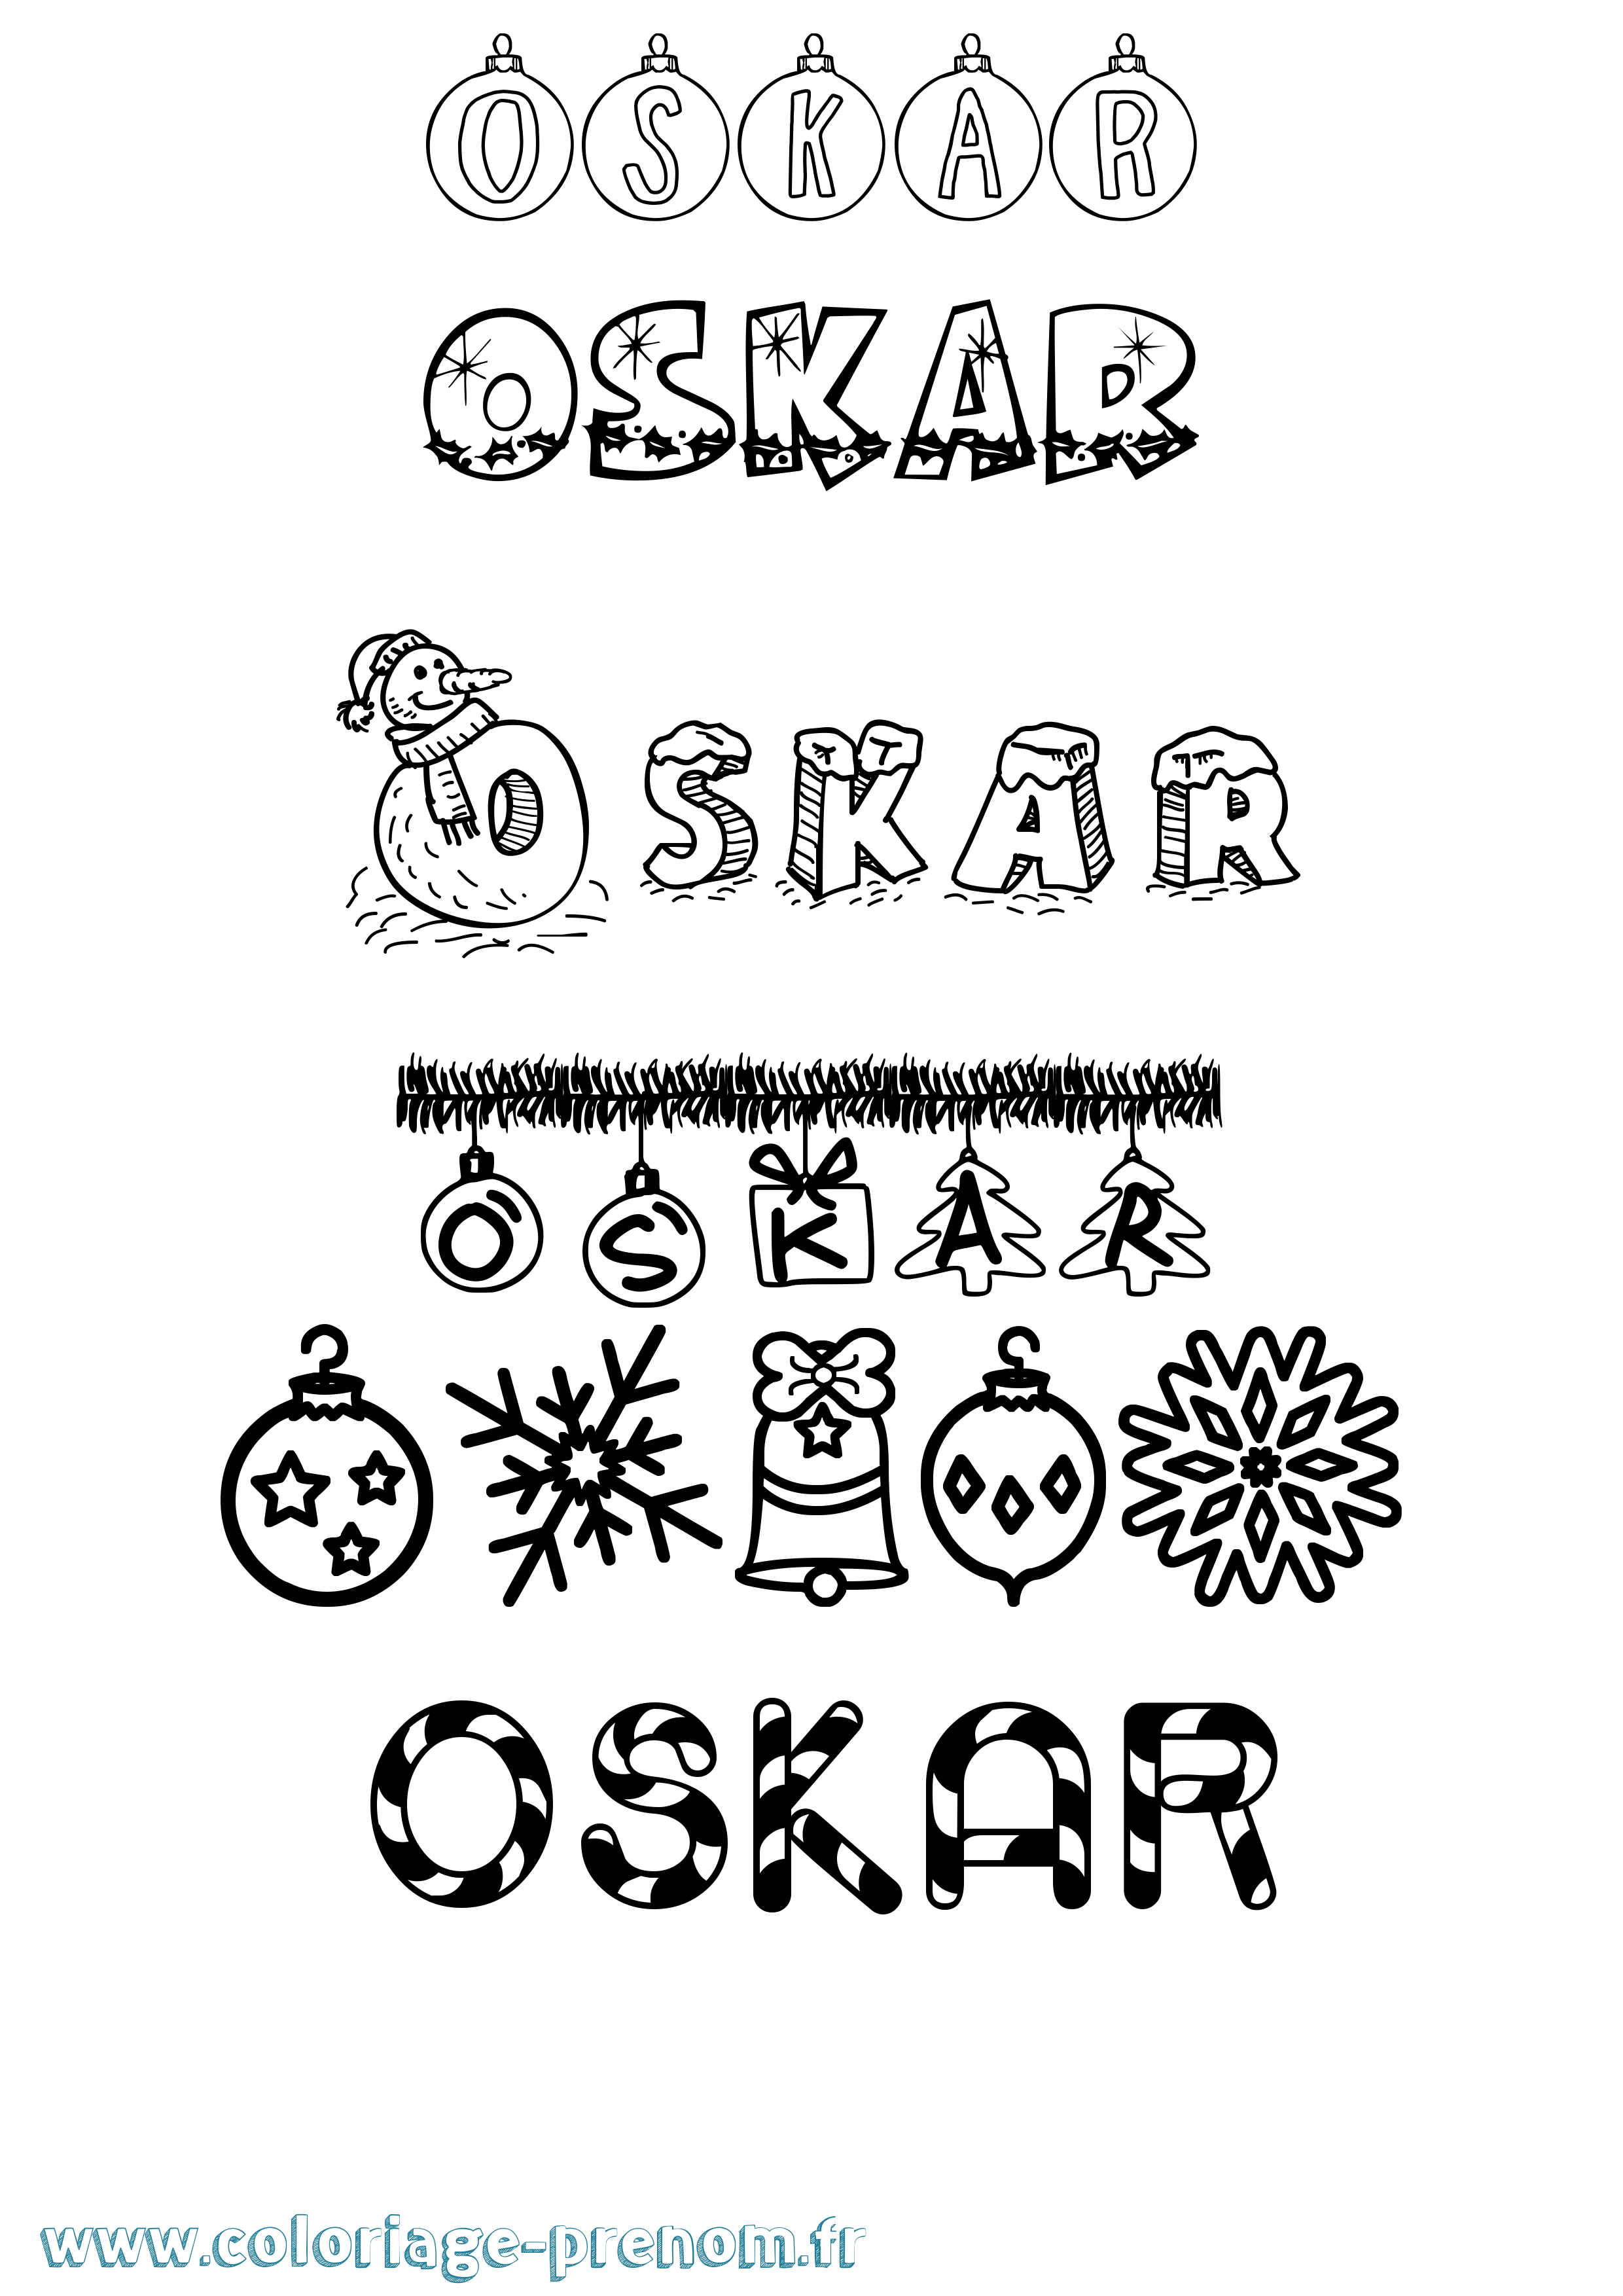 Coloriage prénom Oskar Noël